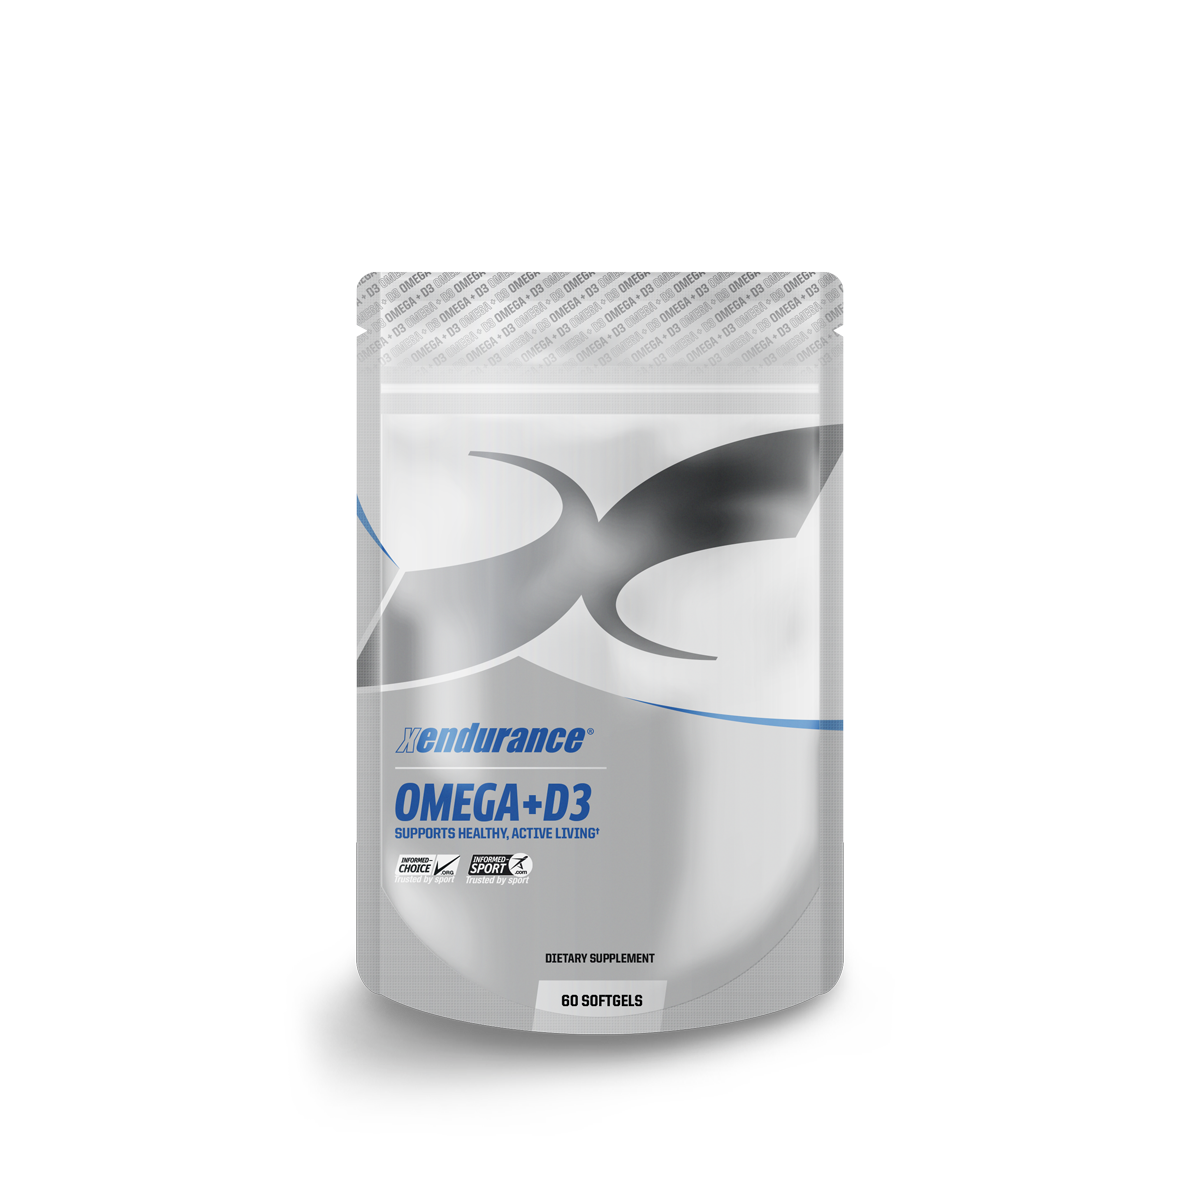 Daily Foundation - Immune Boost, Lactic acid buffer, Omega + D3